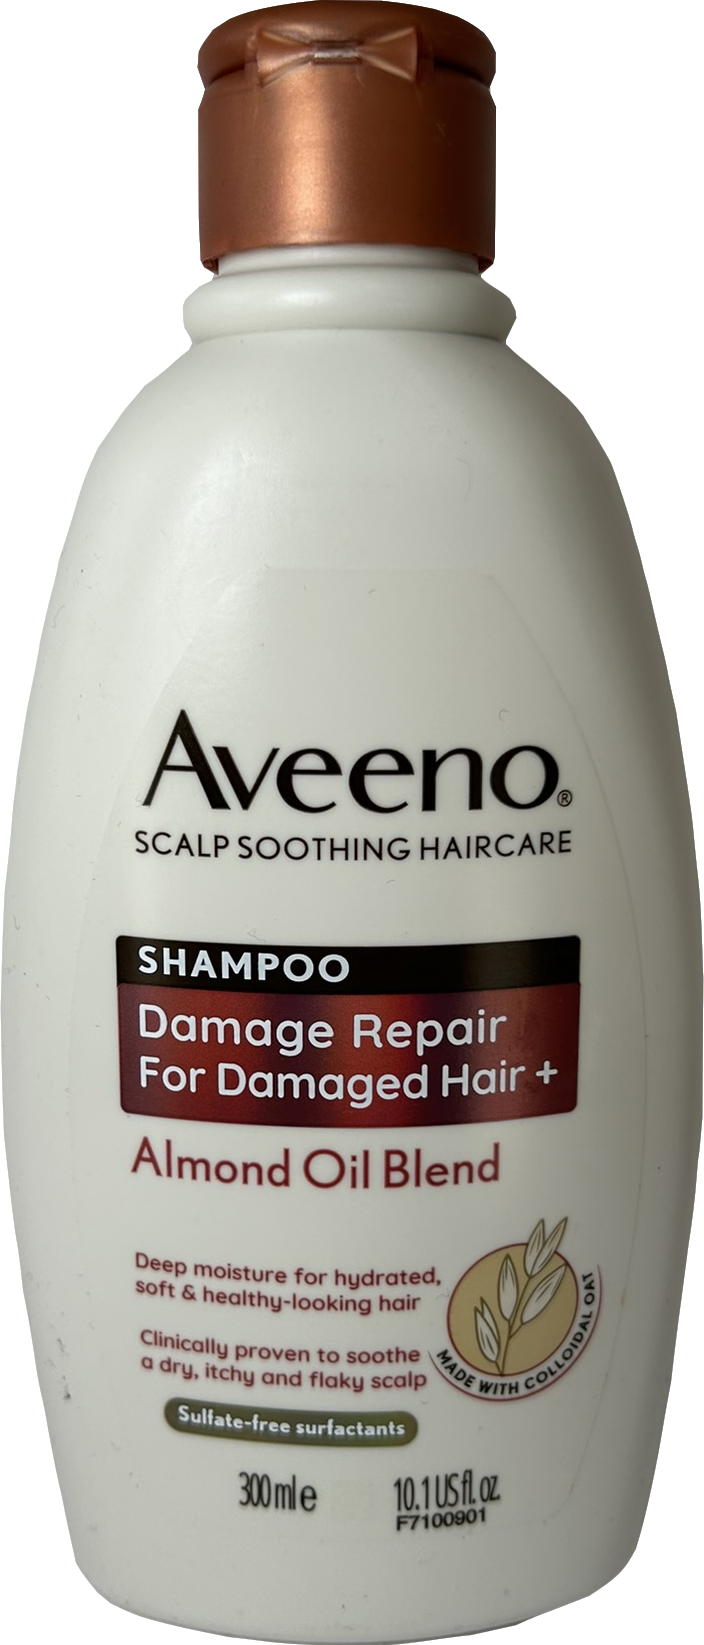 Aveeno Damage Repair+ Almond Oil Blend Shampoo 300ml